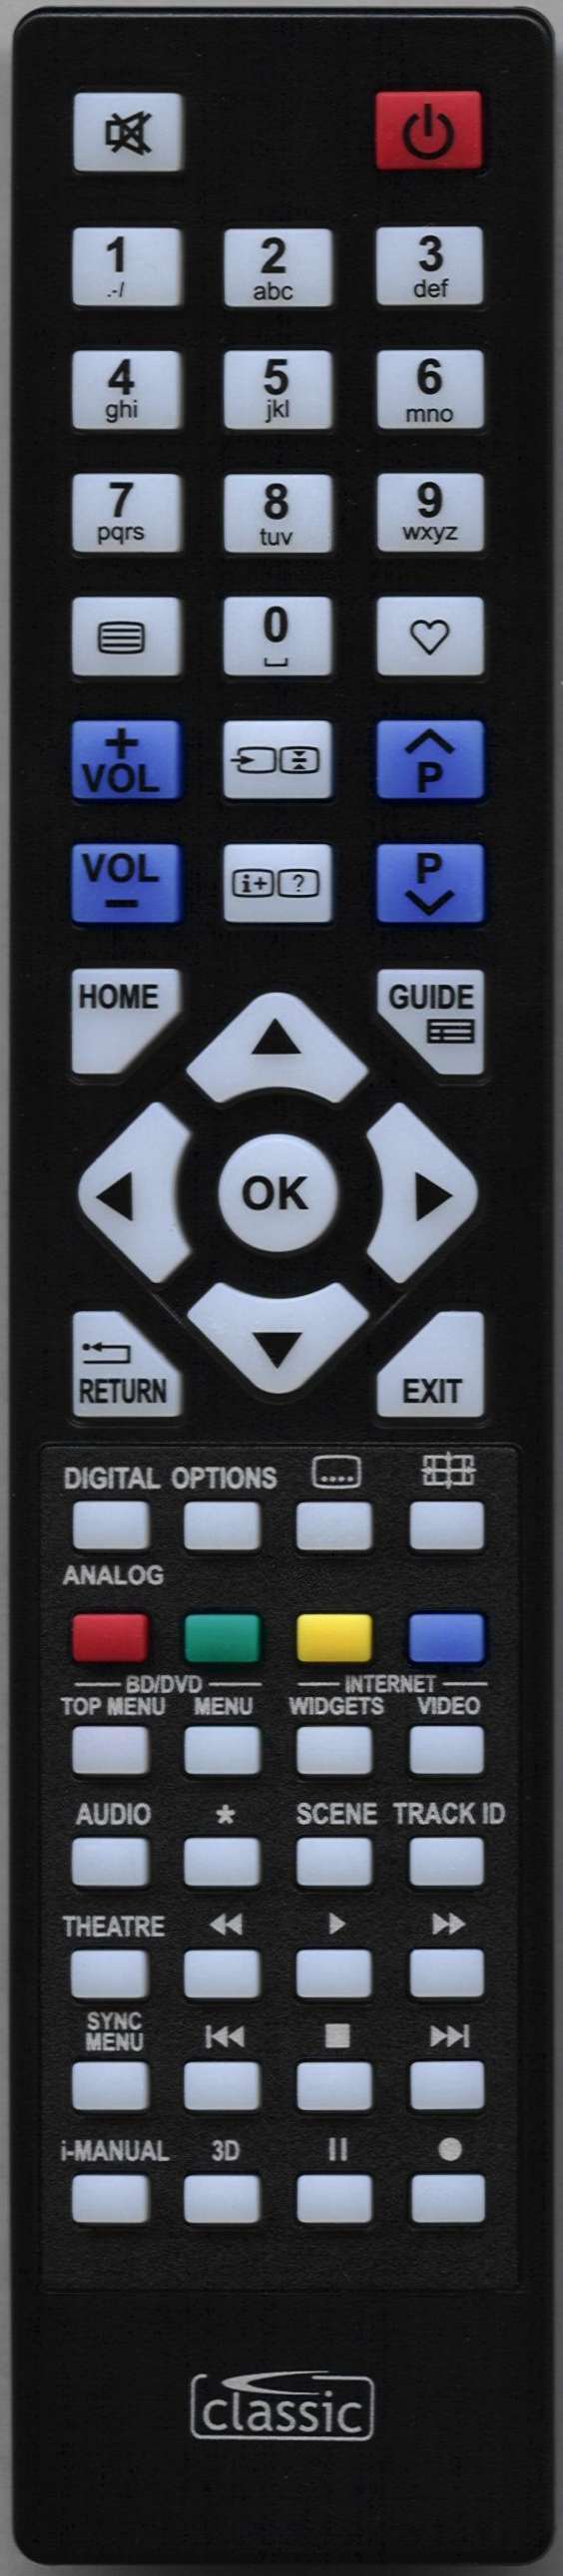 SONY KDL32EX403 Remote Control